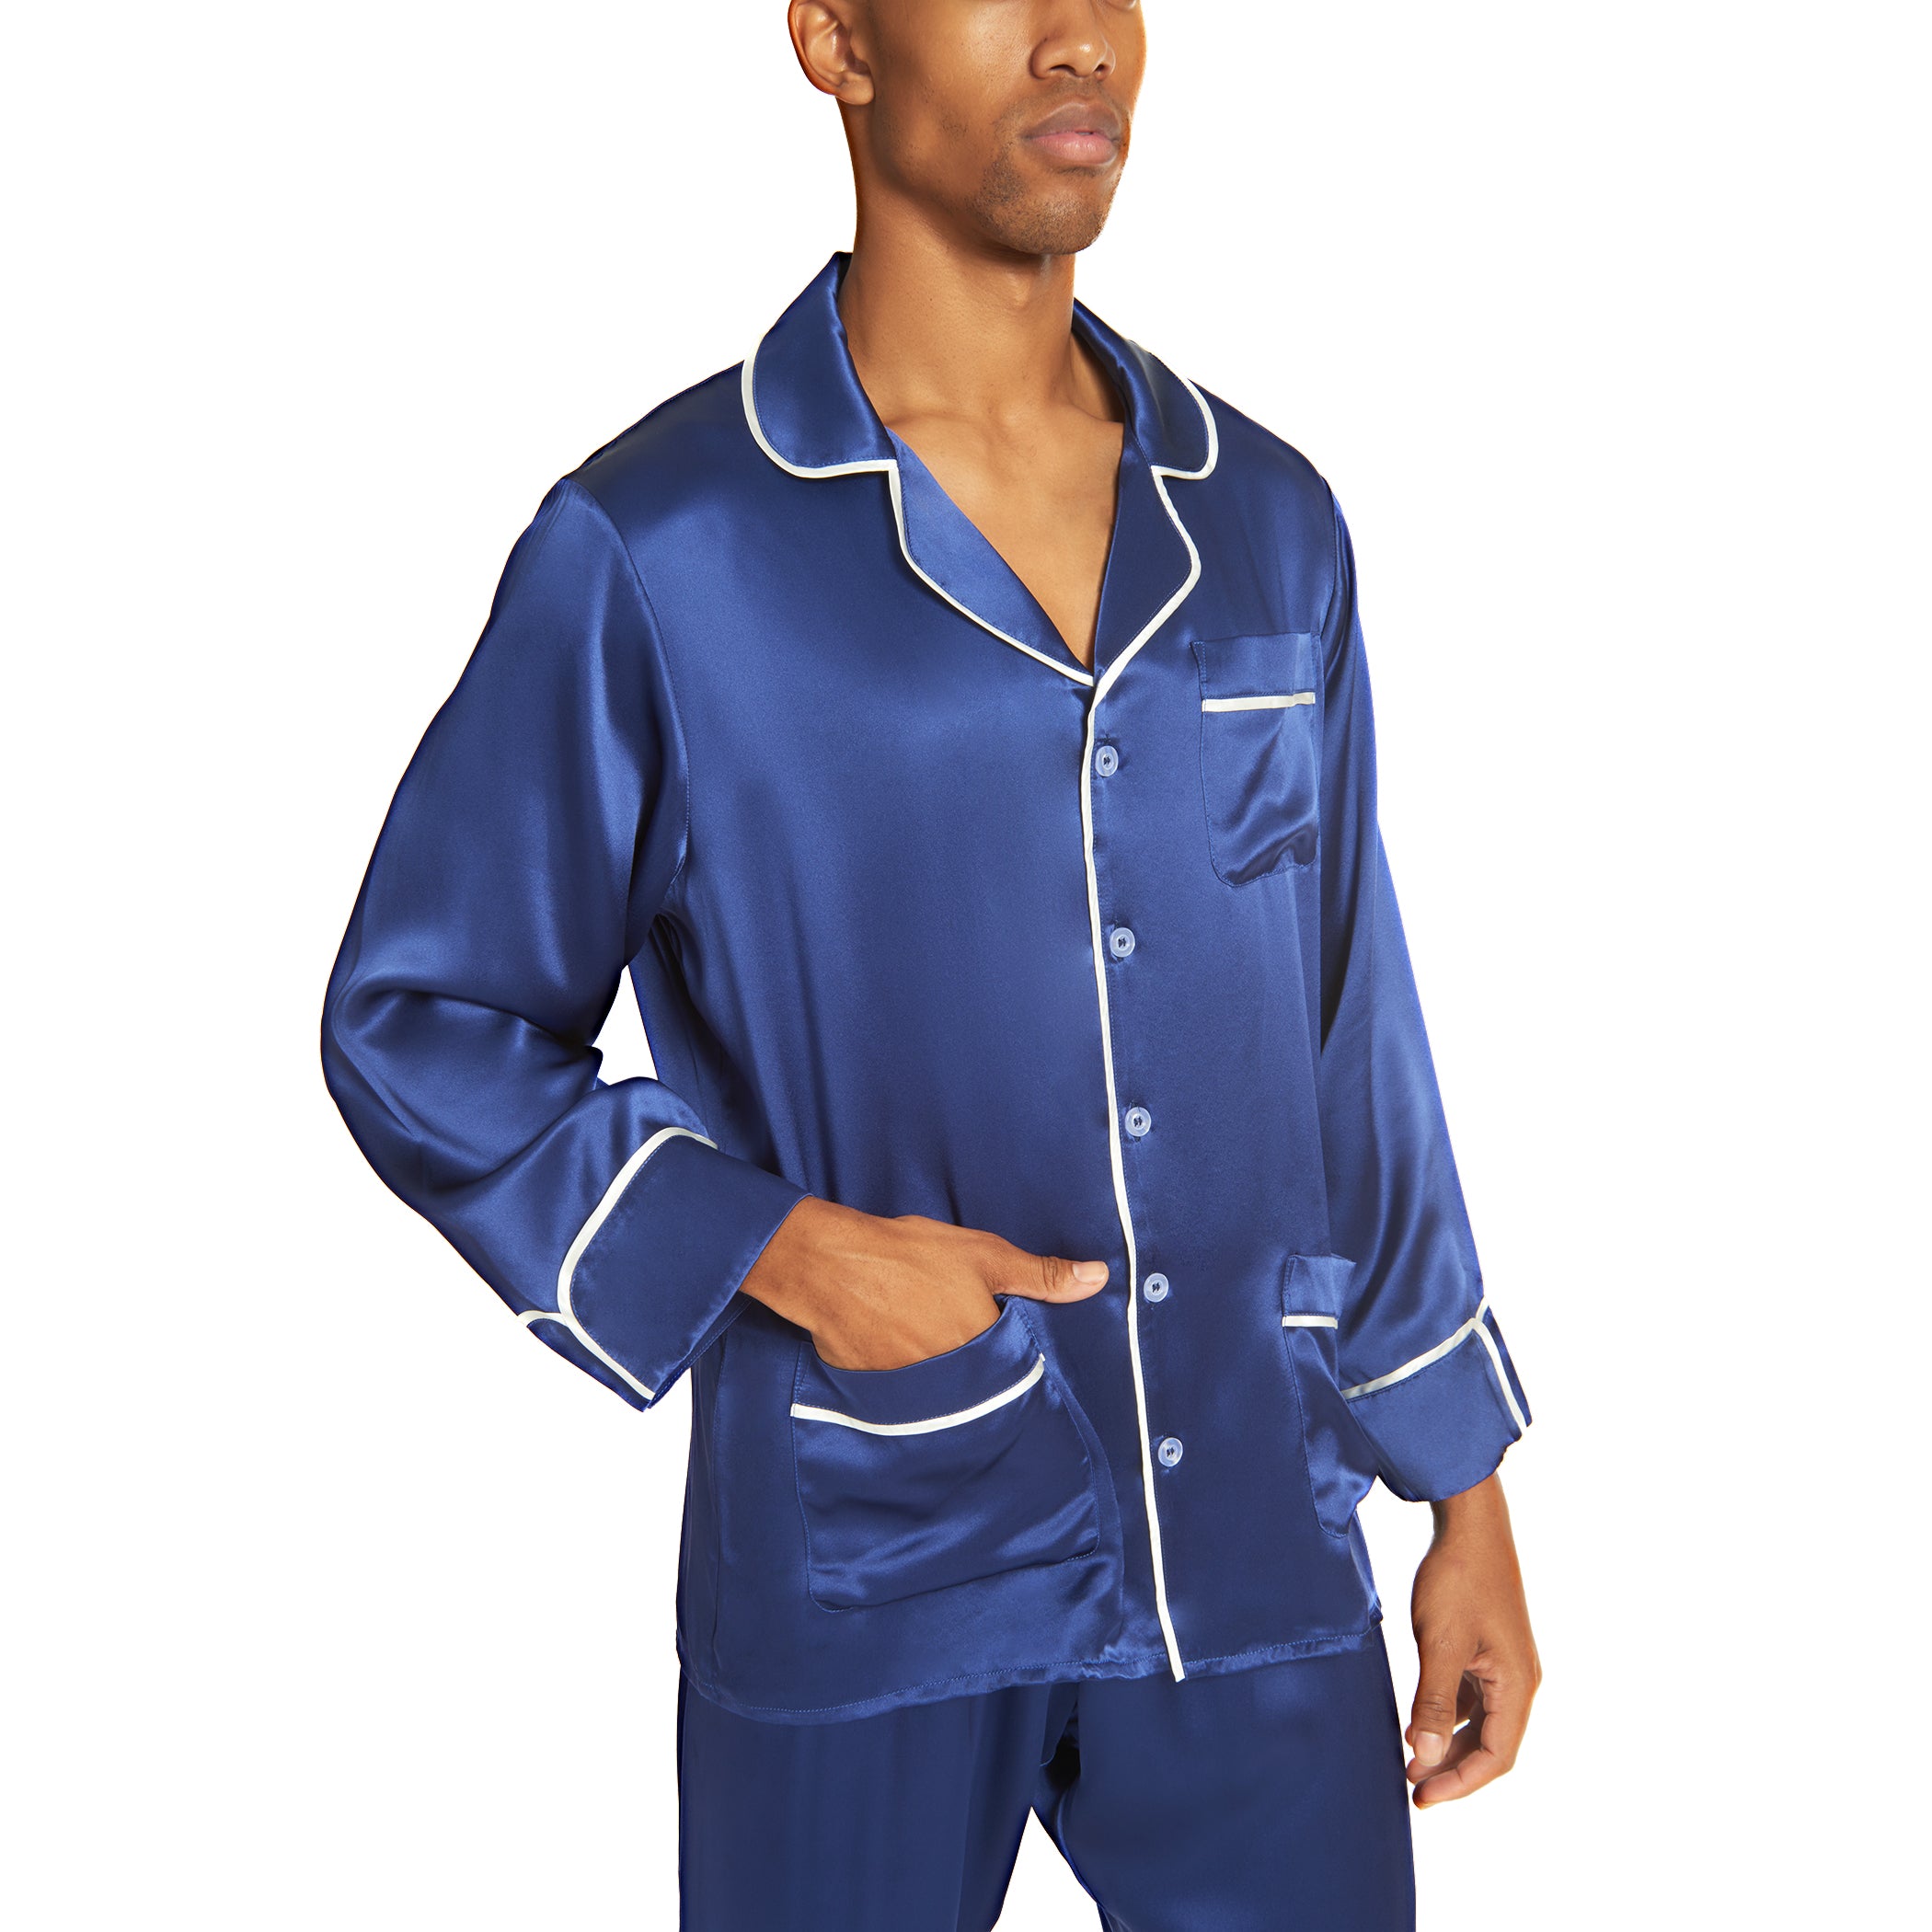 Silk pajama set in Blue